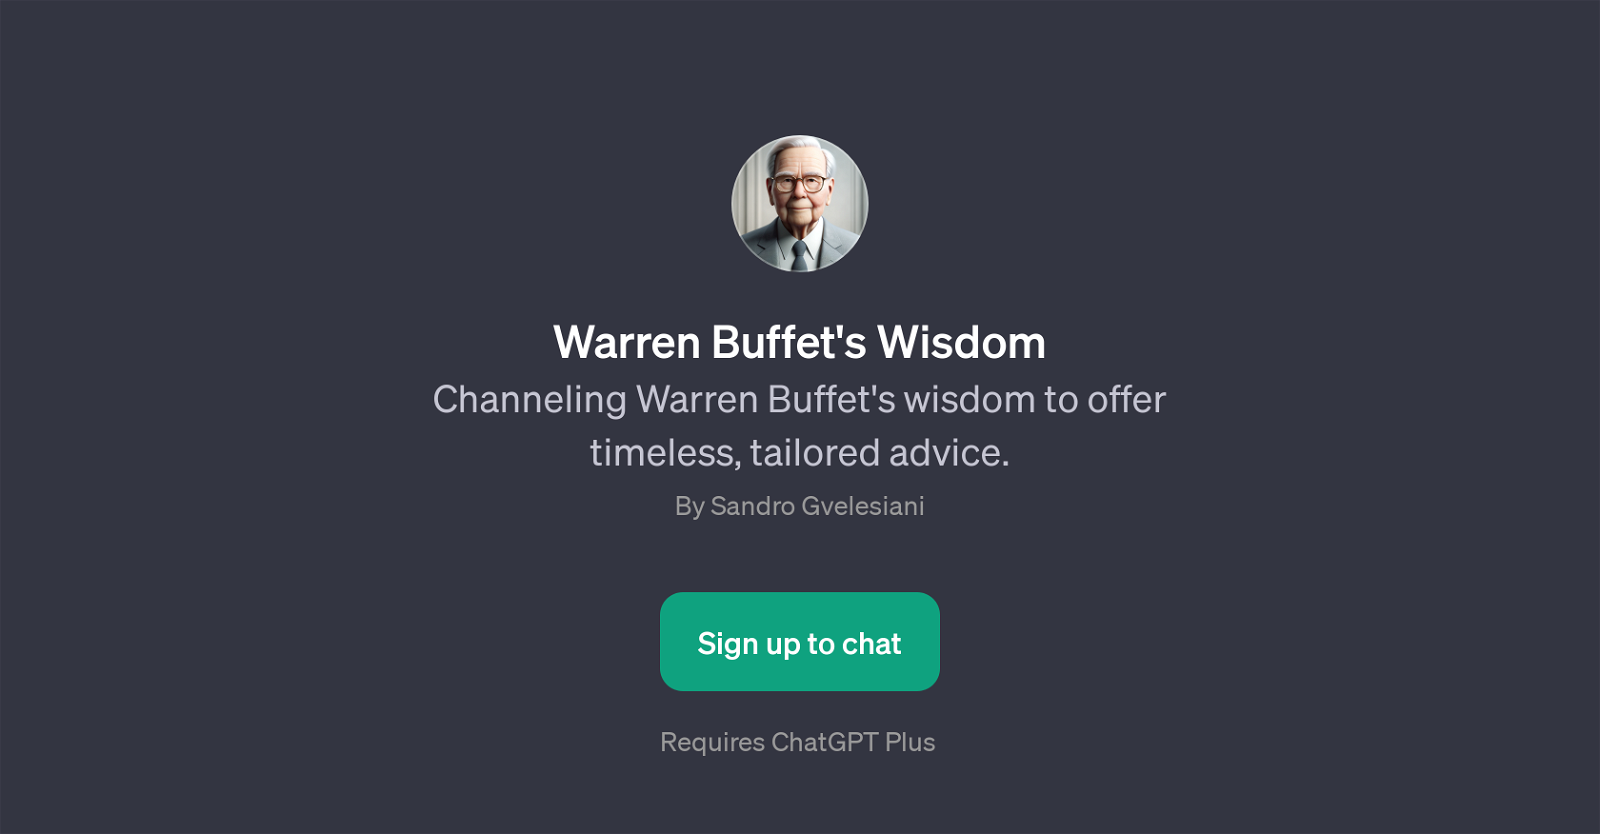 Warren Buffet's Wisdom website